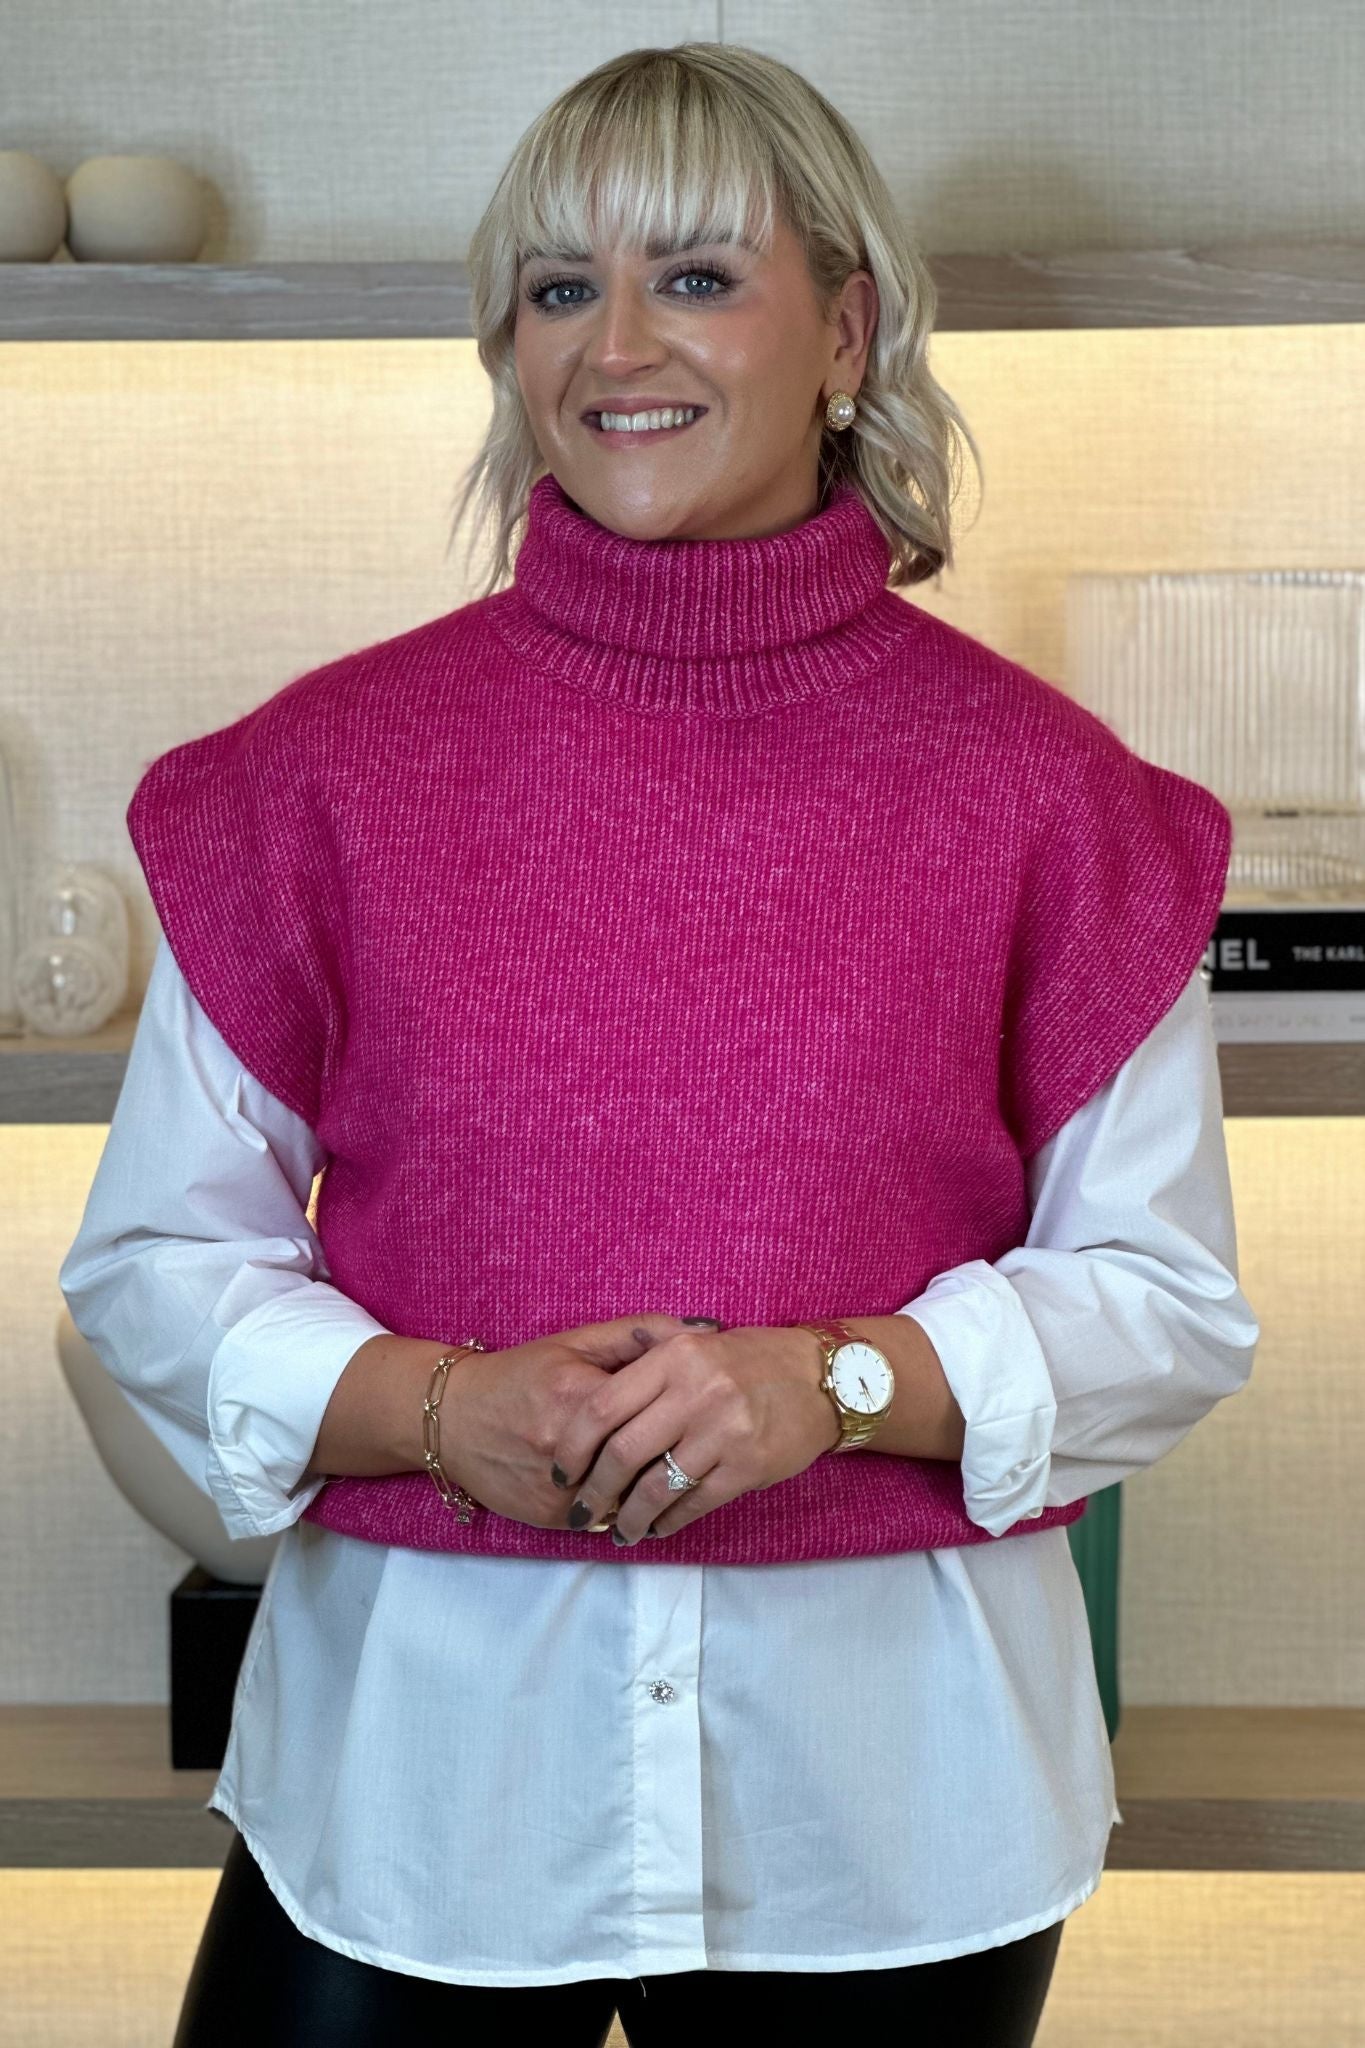 Sarah Sleeveless Shoulder Pad Knit In Pink - The Walk in Wardrobe